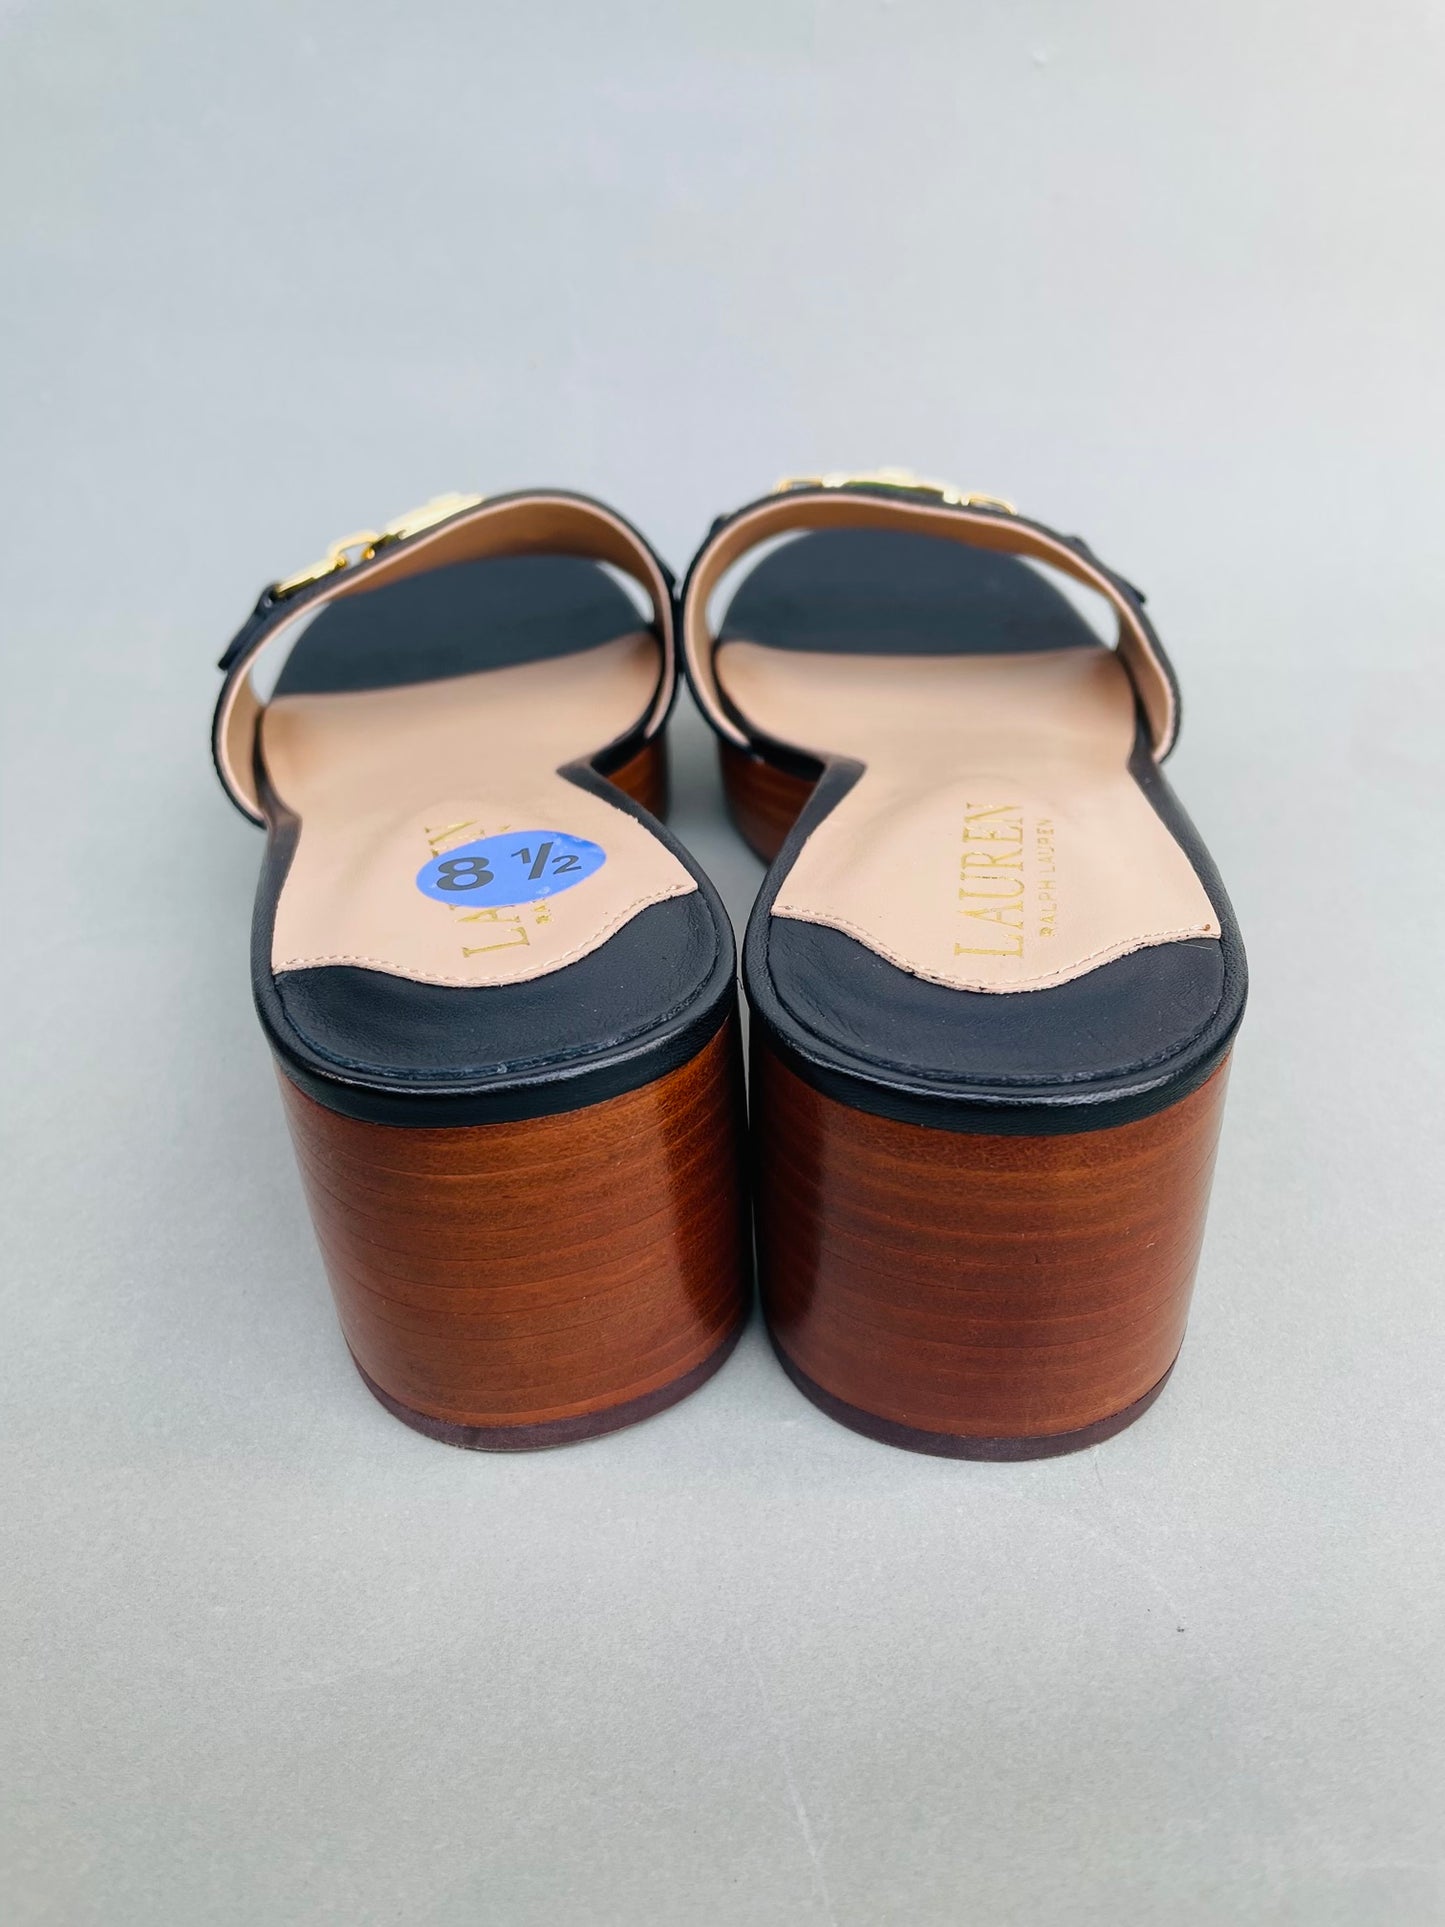 Ralph Lauren sandal